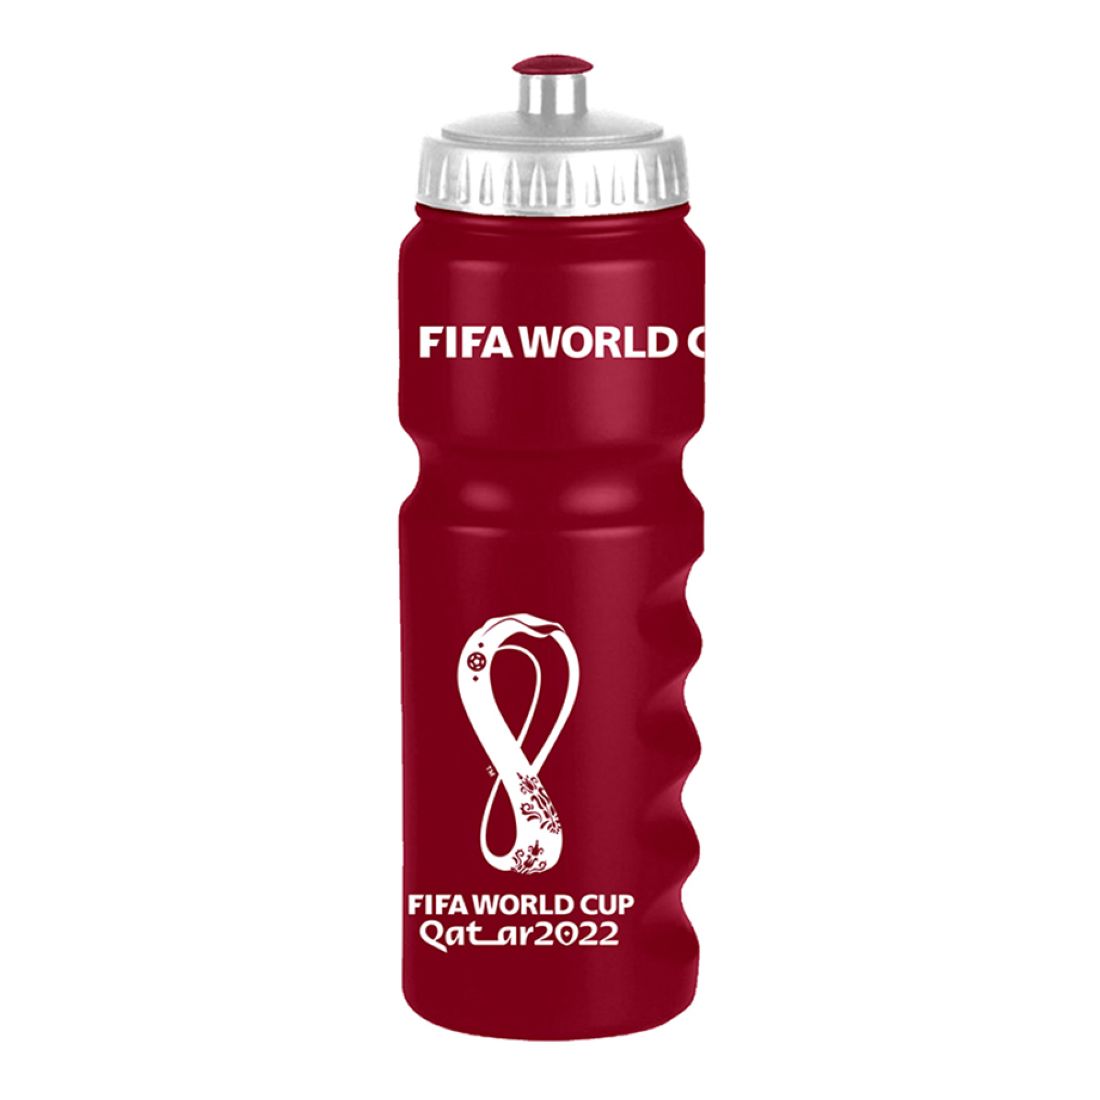 Fifa World Cup 2022 Printed Sport Leak Proof Water Bottle - Maroon 750 ml